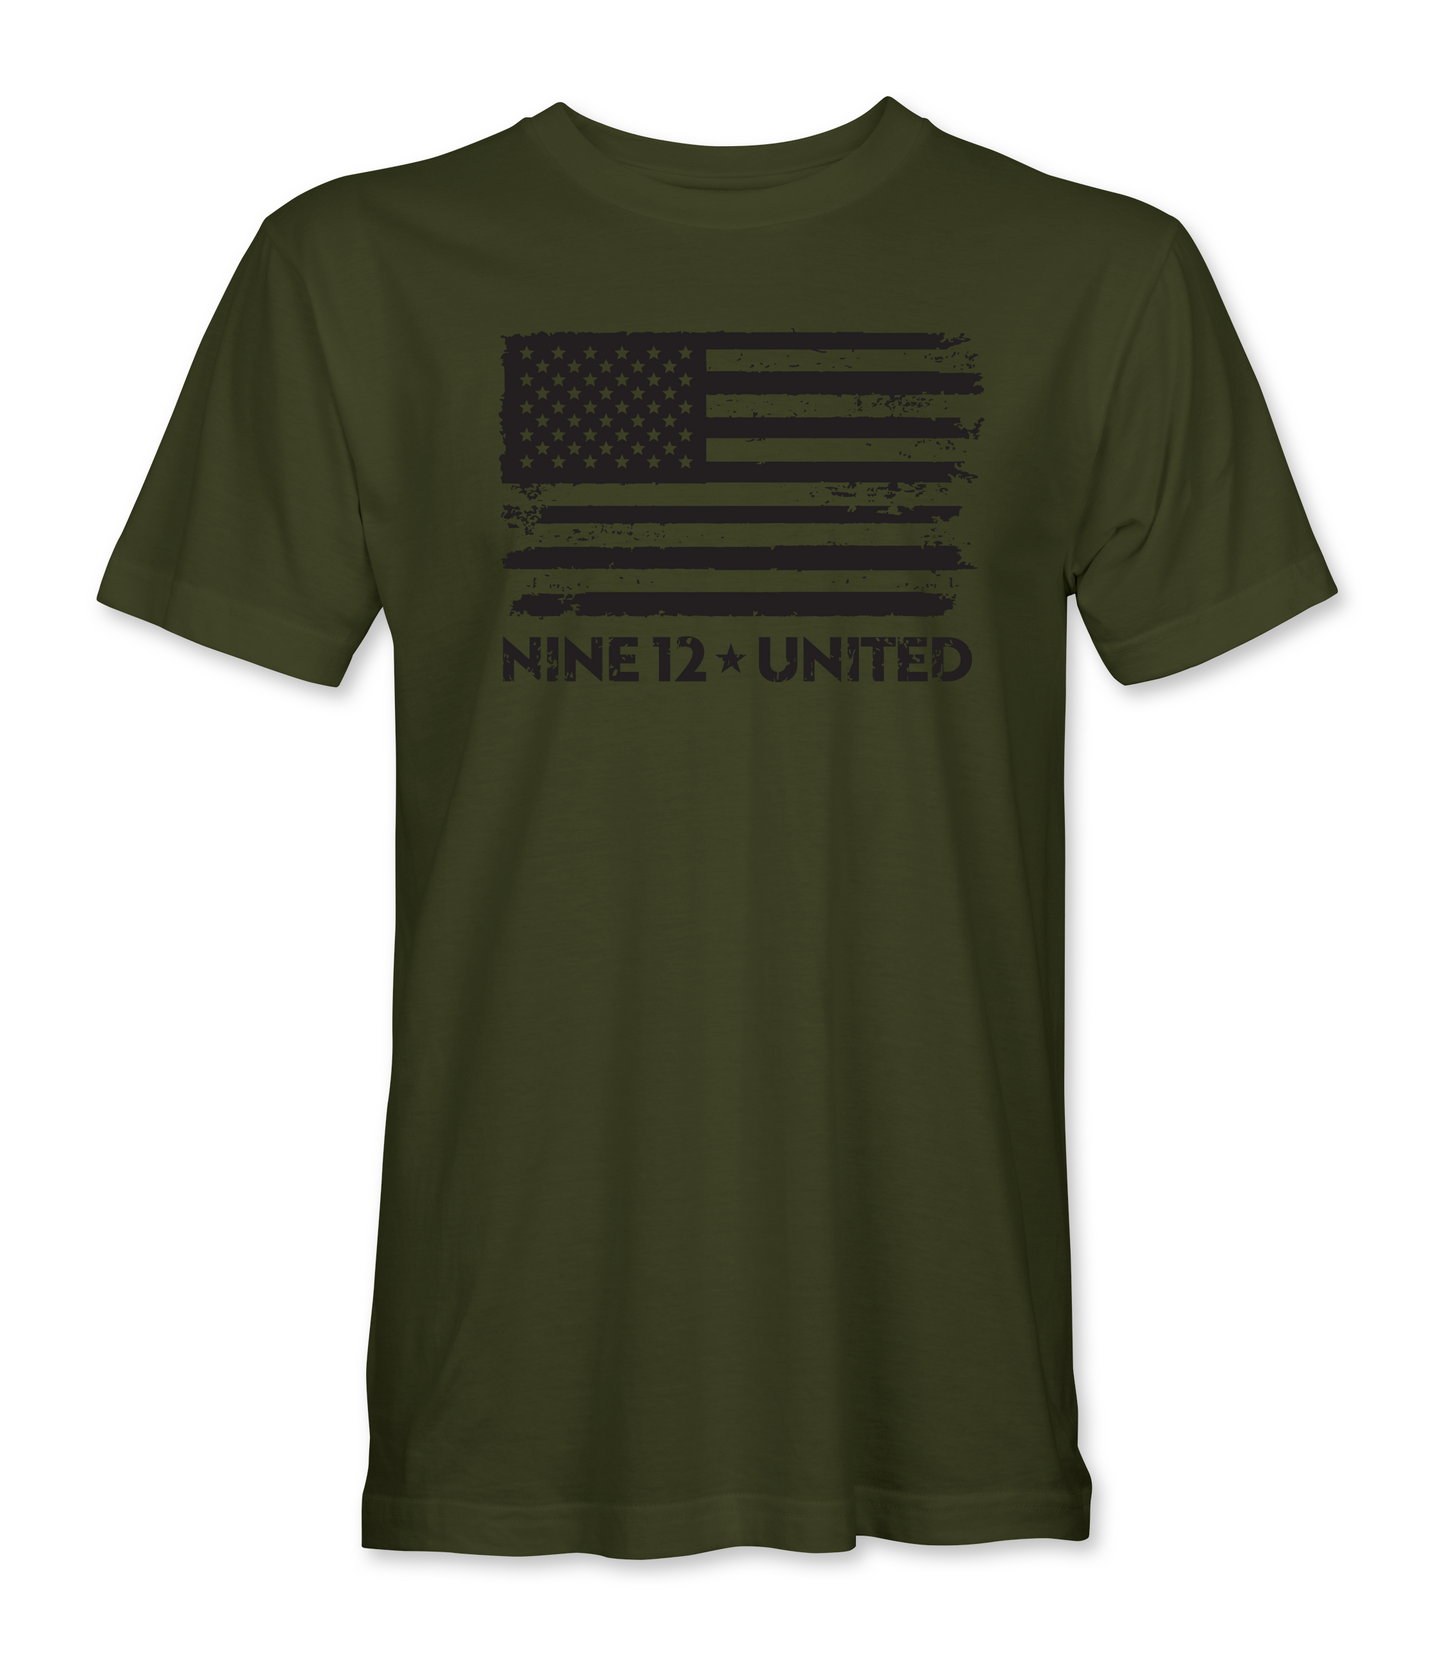 9.12 United Flag T-Shirt